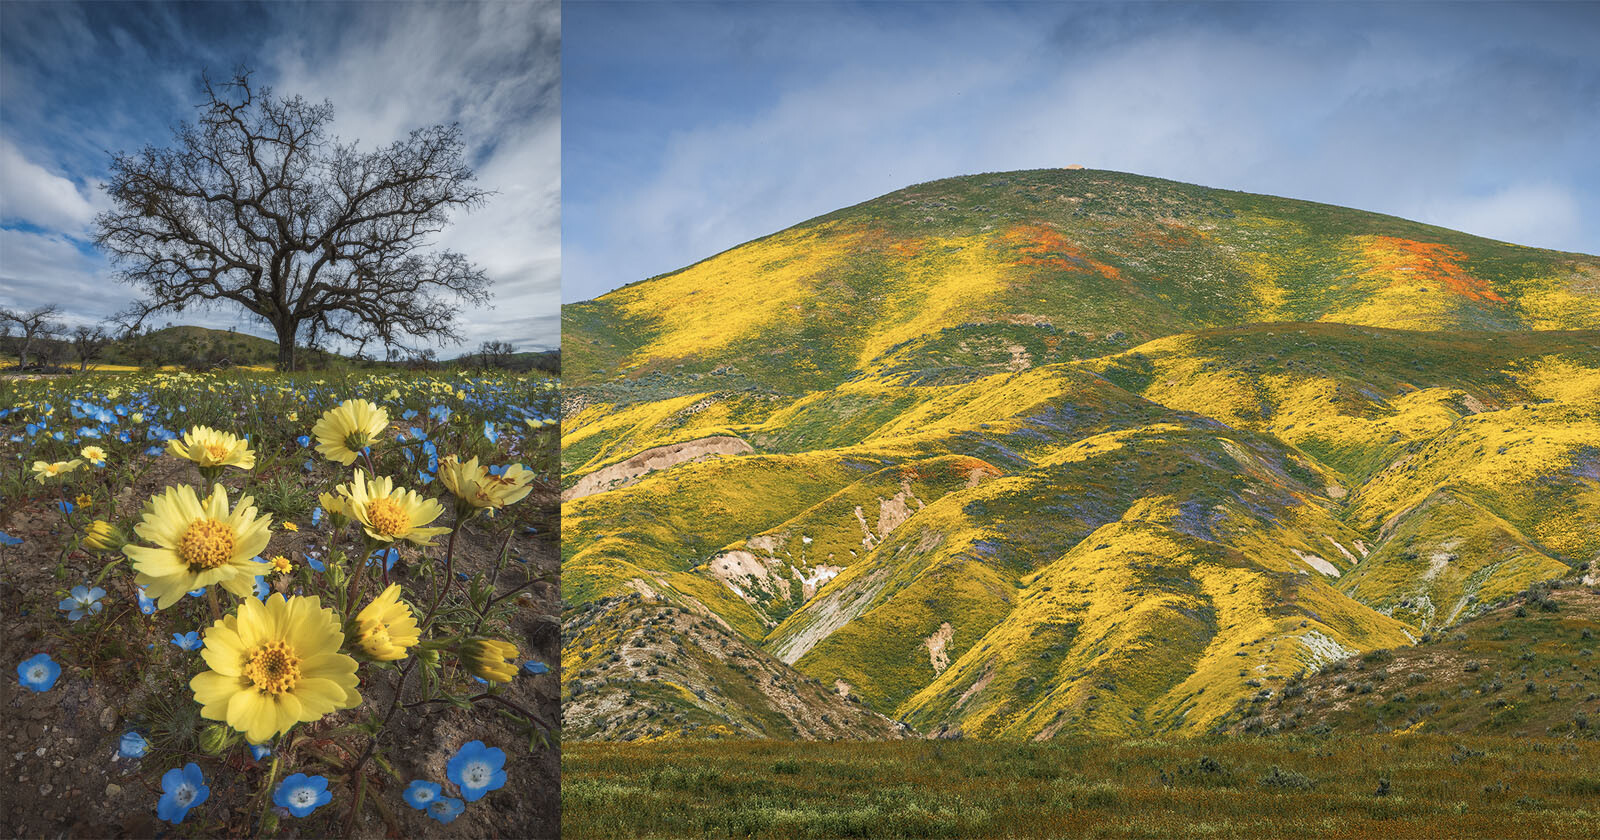  wildflower photography tips capture california superbloom 